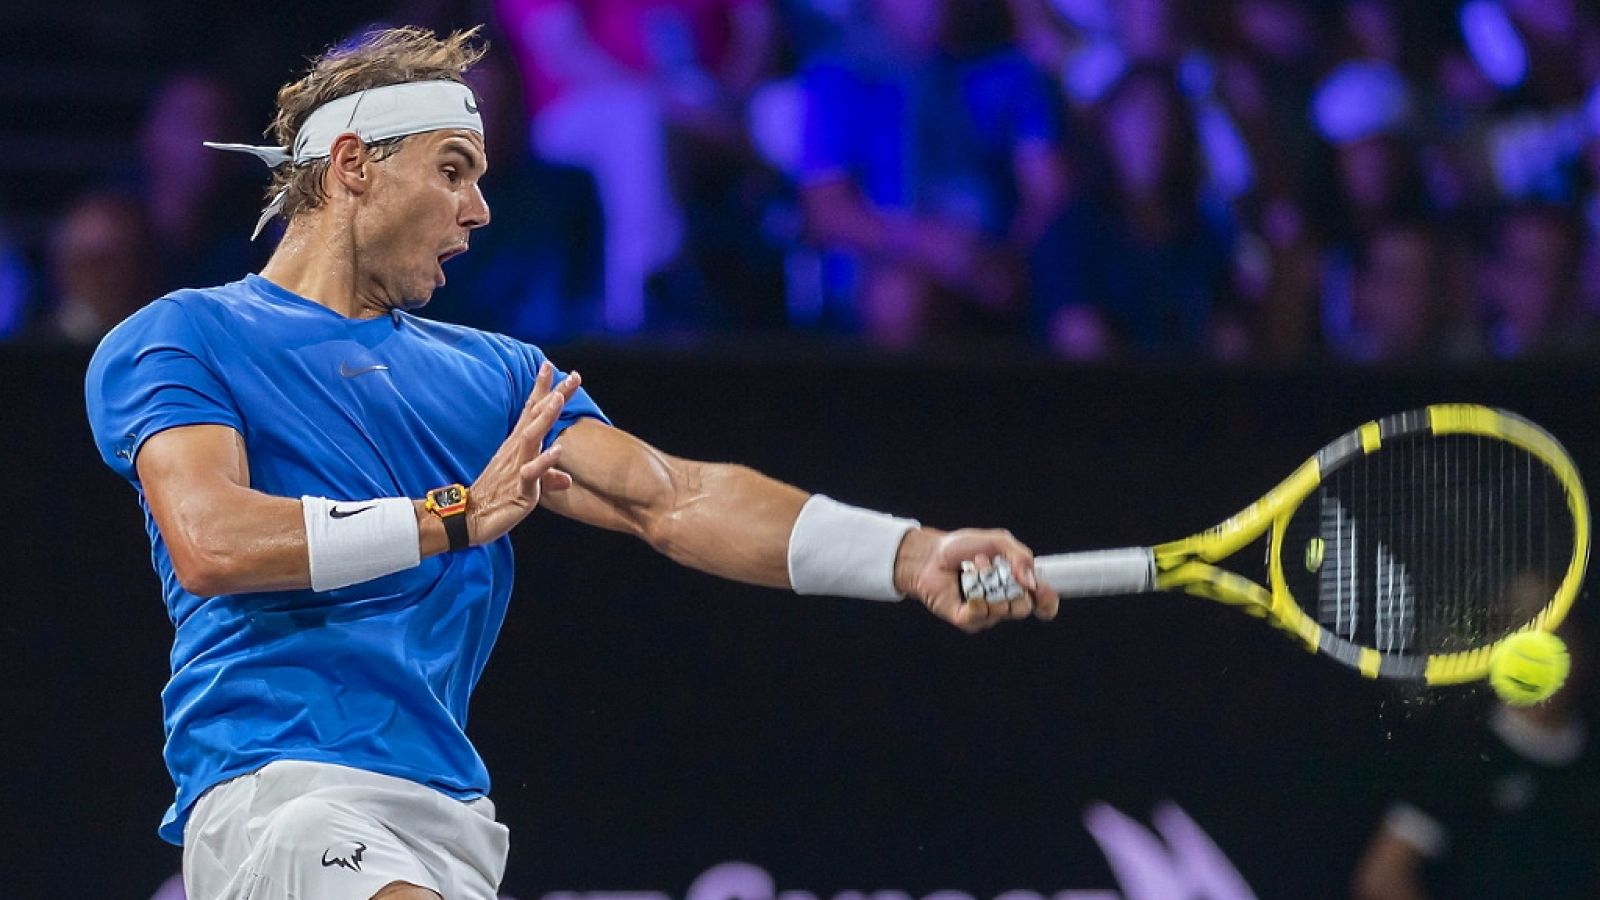 Tenis - Laver Cup 2019. 7º partido individual: Nadal - Raonic